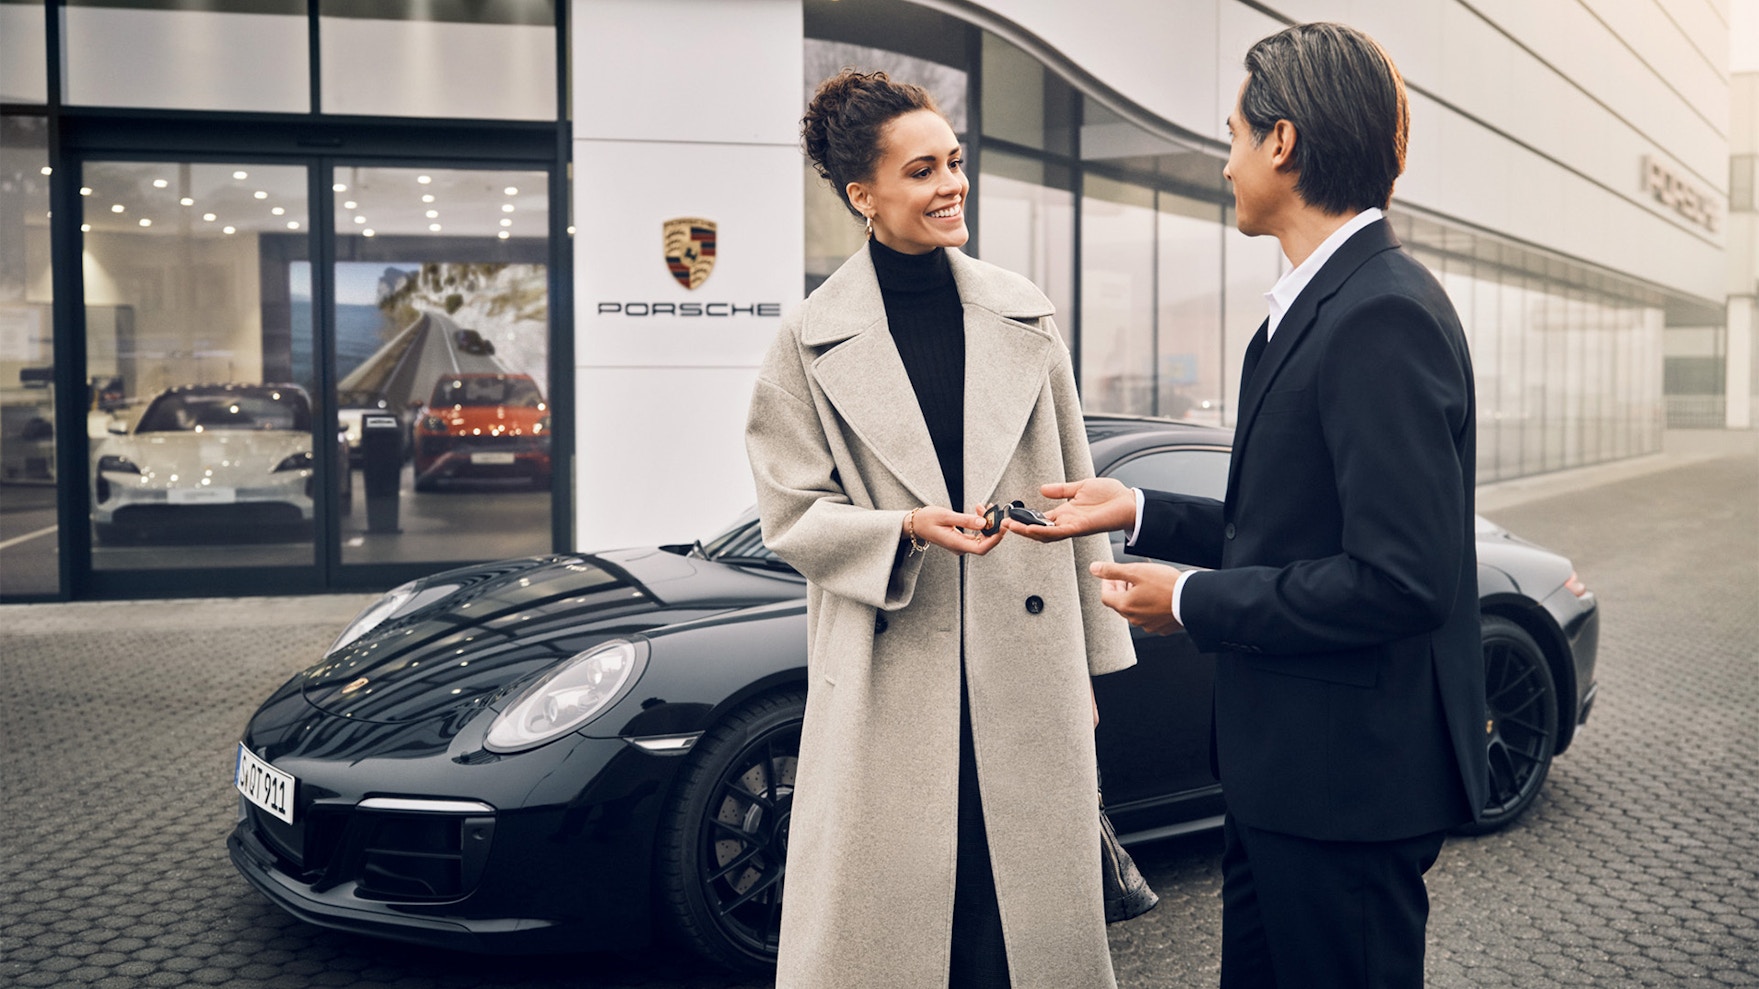 A woman receiving a car key from a man in front of a Porsche car and a Porsche center.